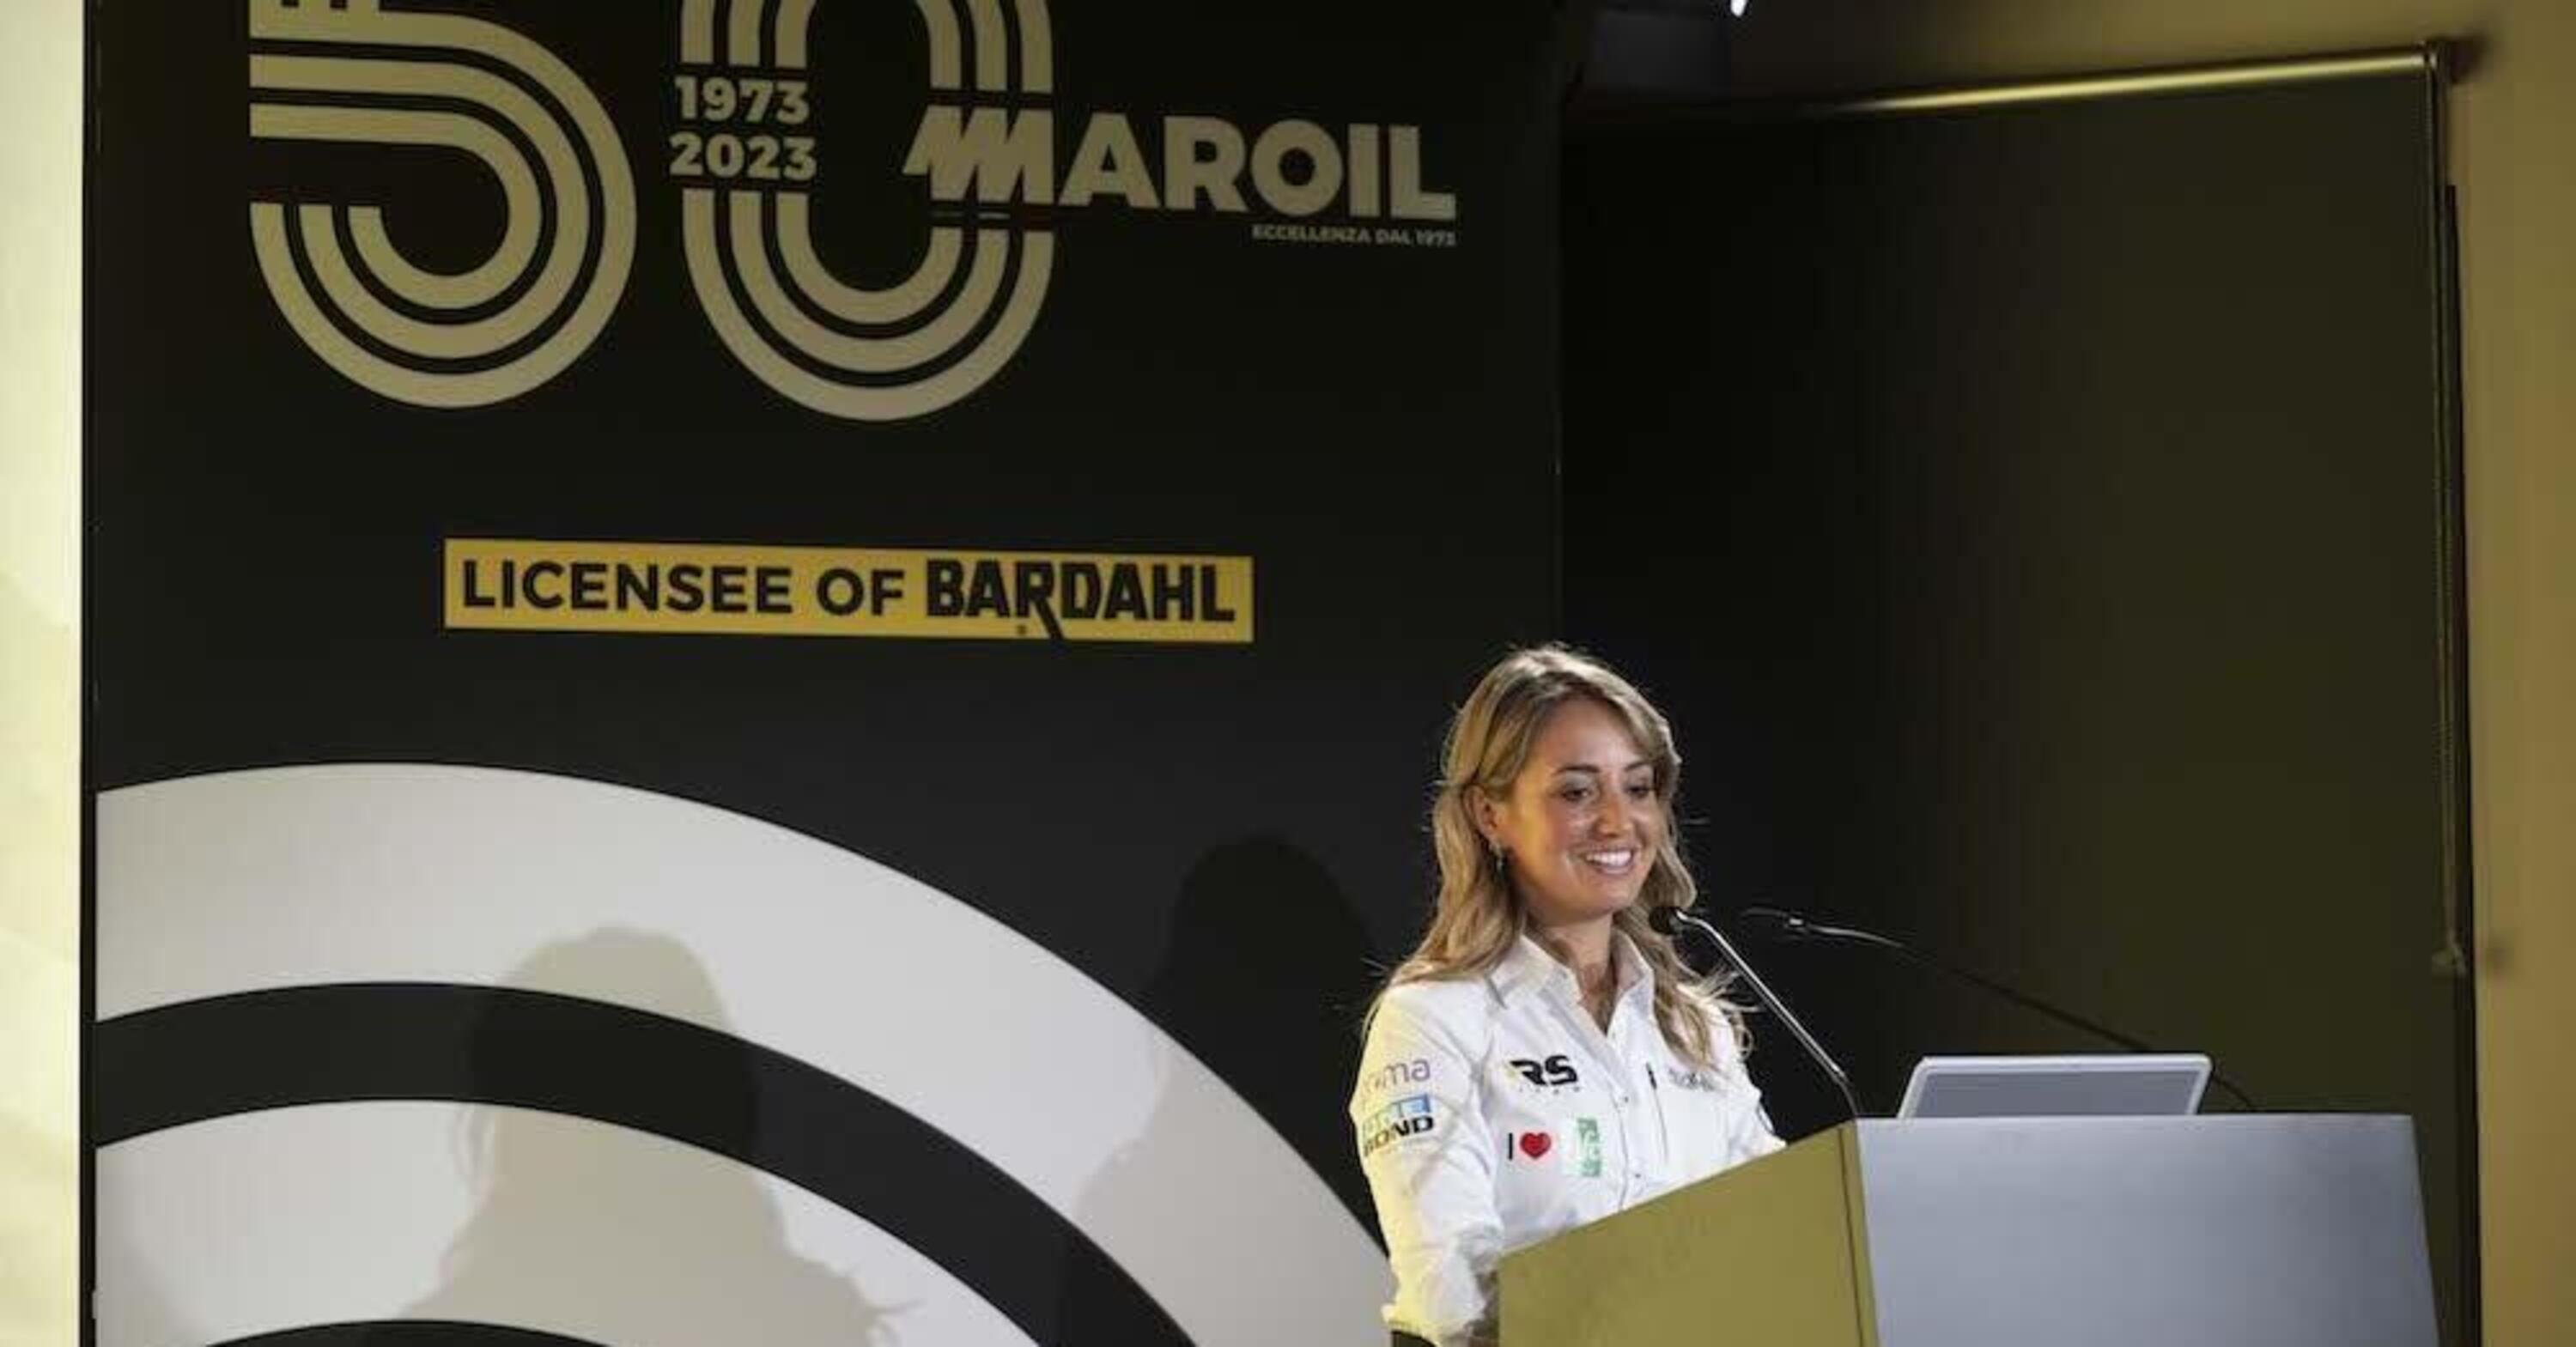 Maroil-Bardahl Italia celebra 50 anni